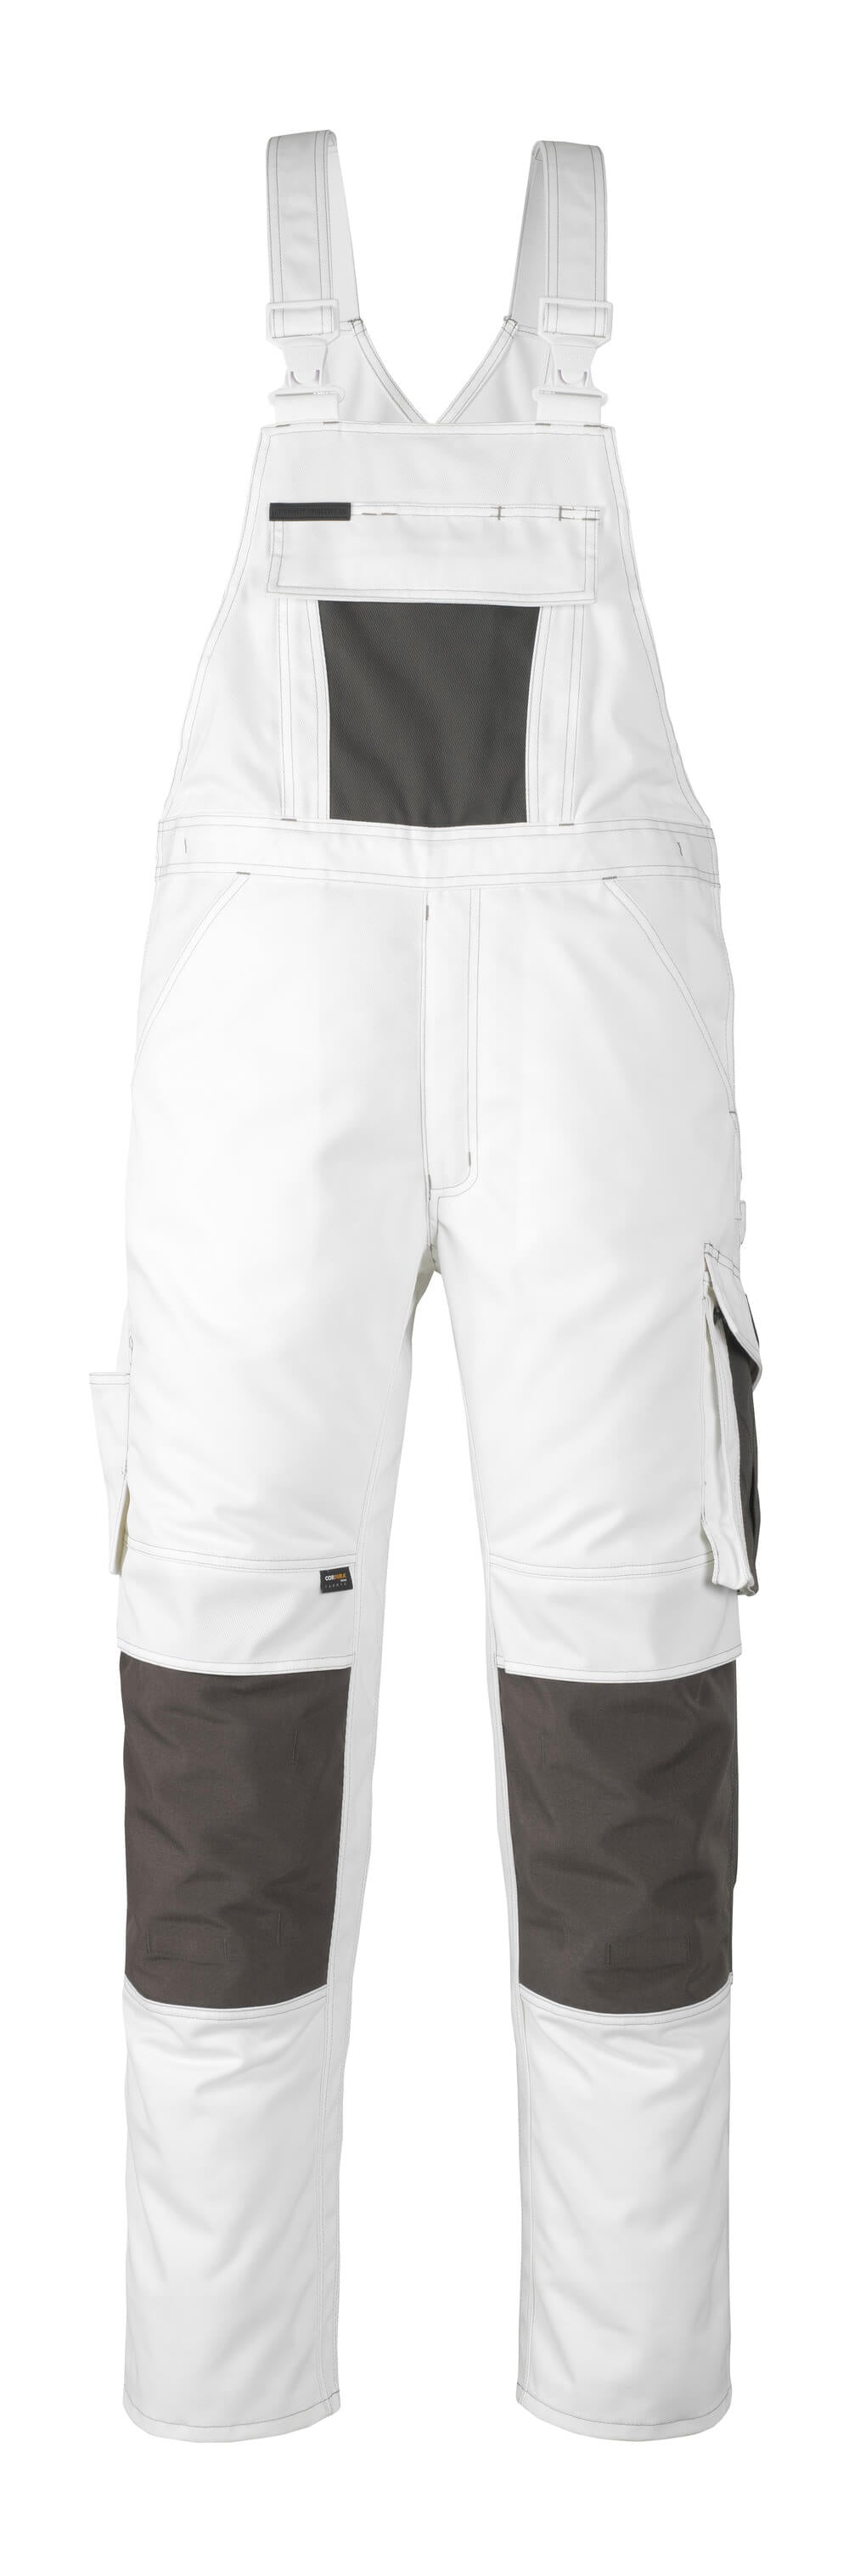 Mascot UNIQUE  Leipzig Bib & Brace with kneepad pockets 12069 white/dark anthracite